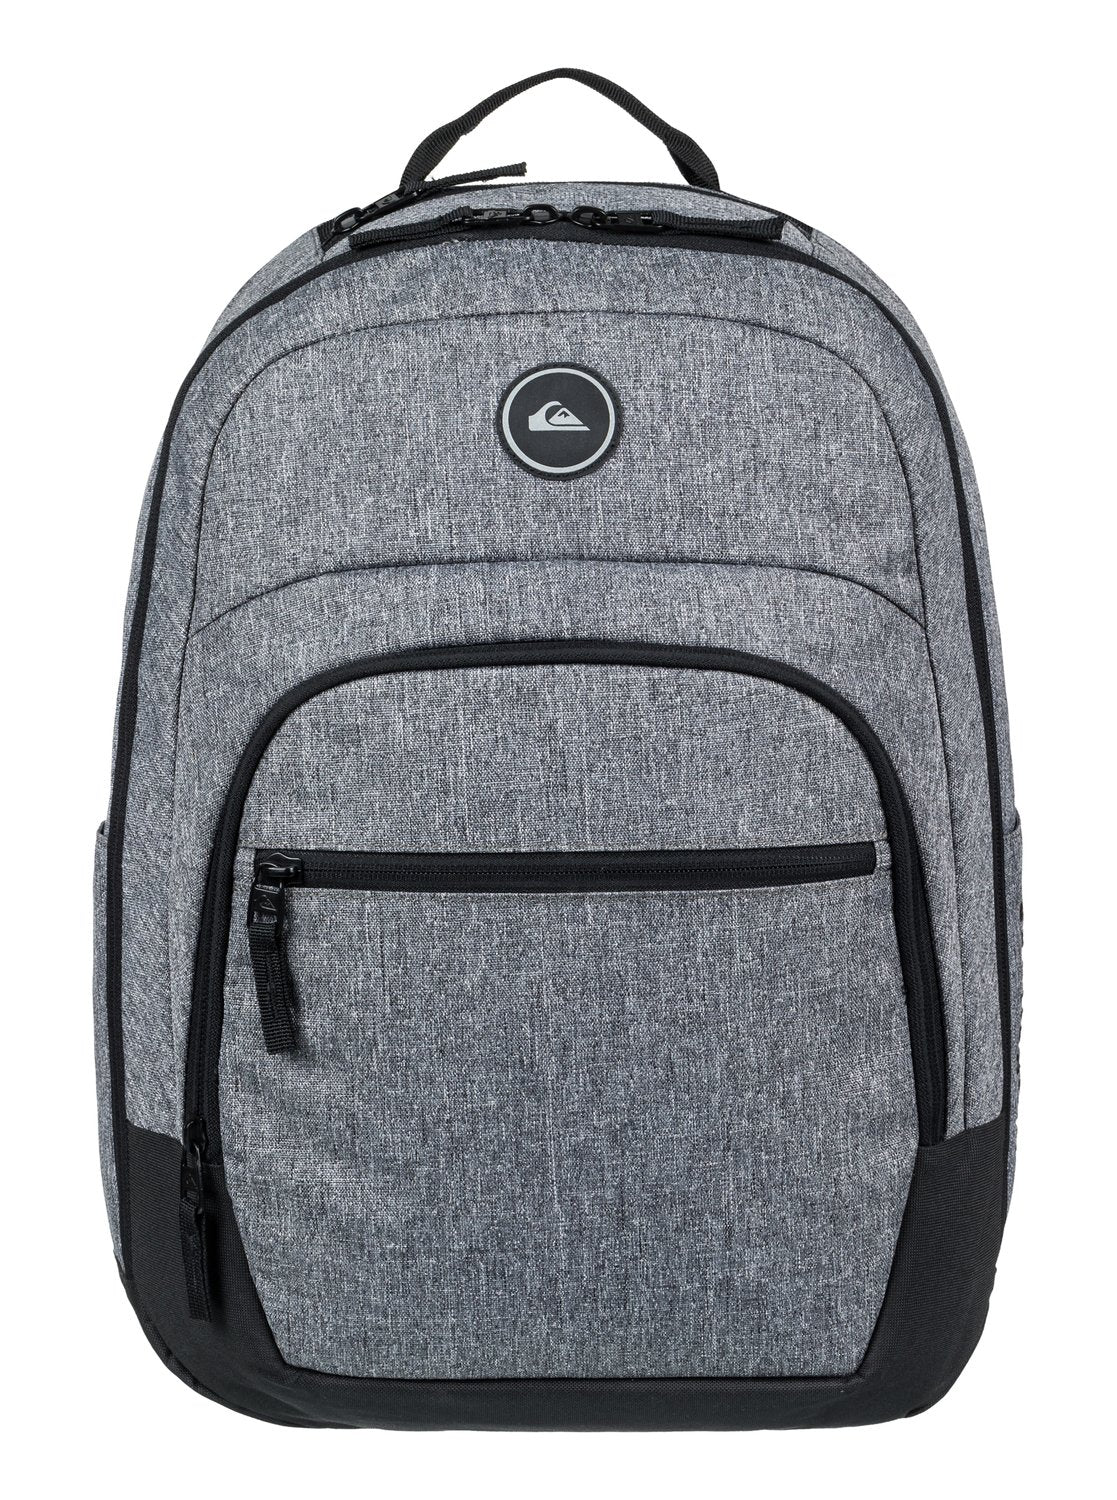 Quiksilver Schoolie Cooler 25L Backpack SGRH OS